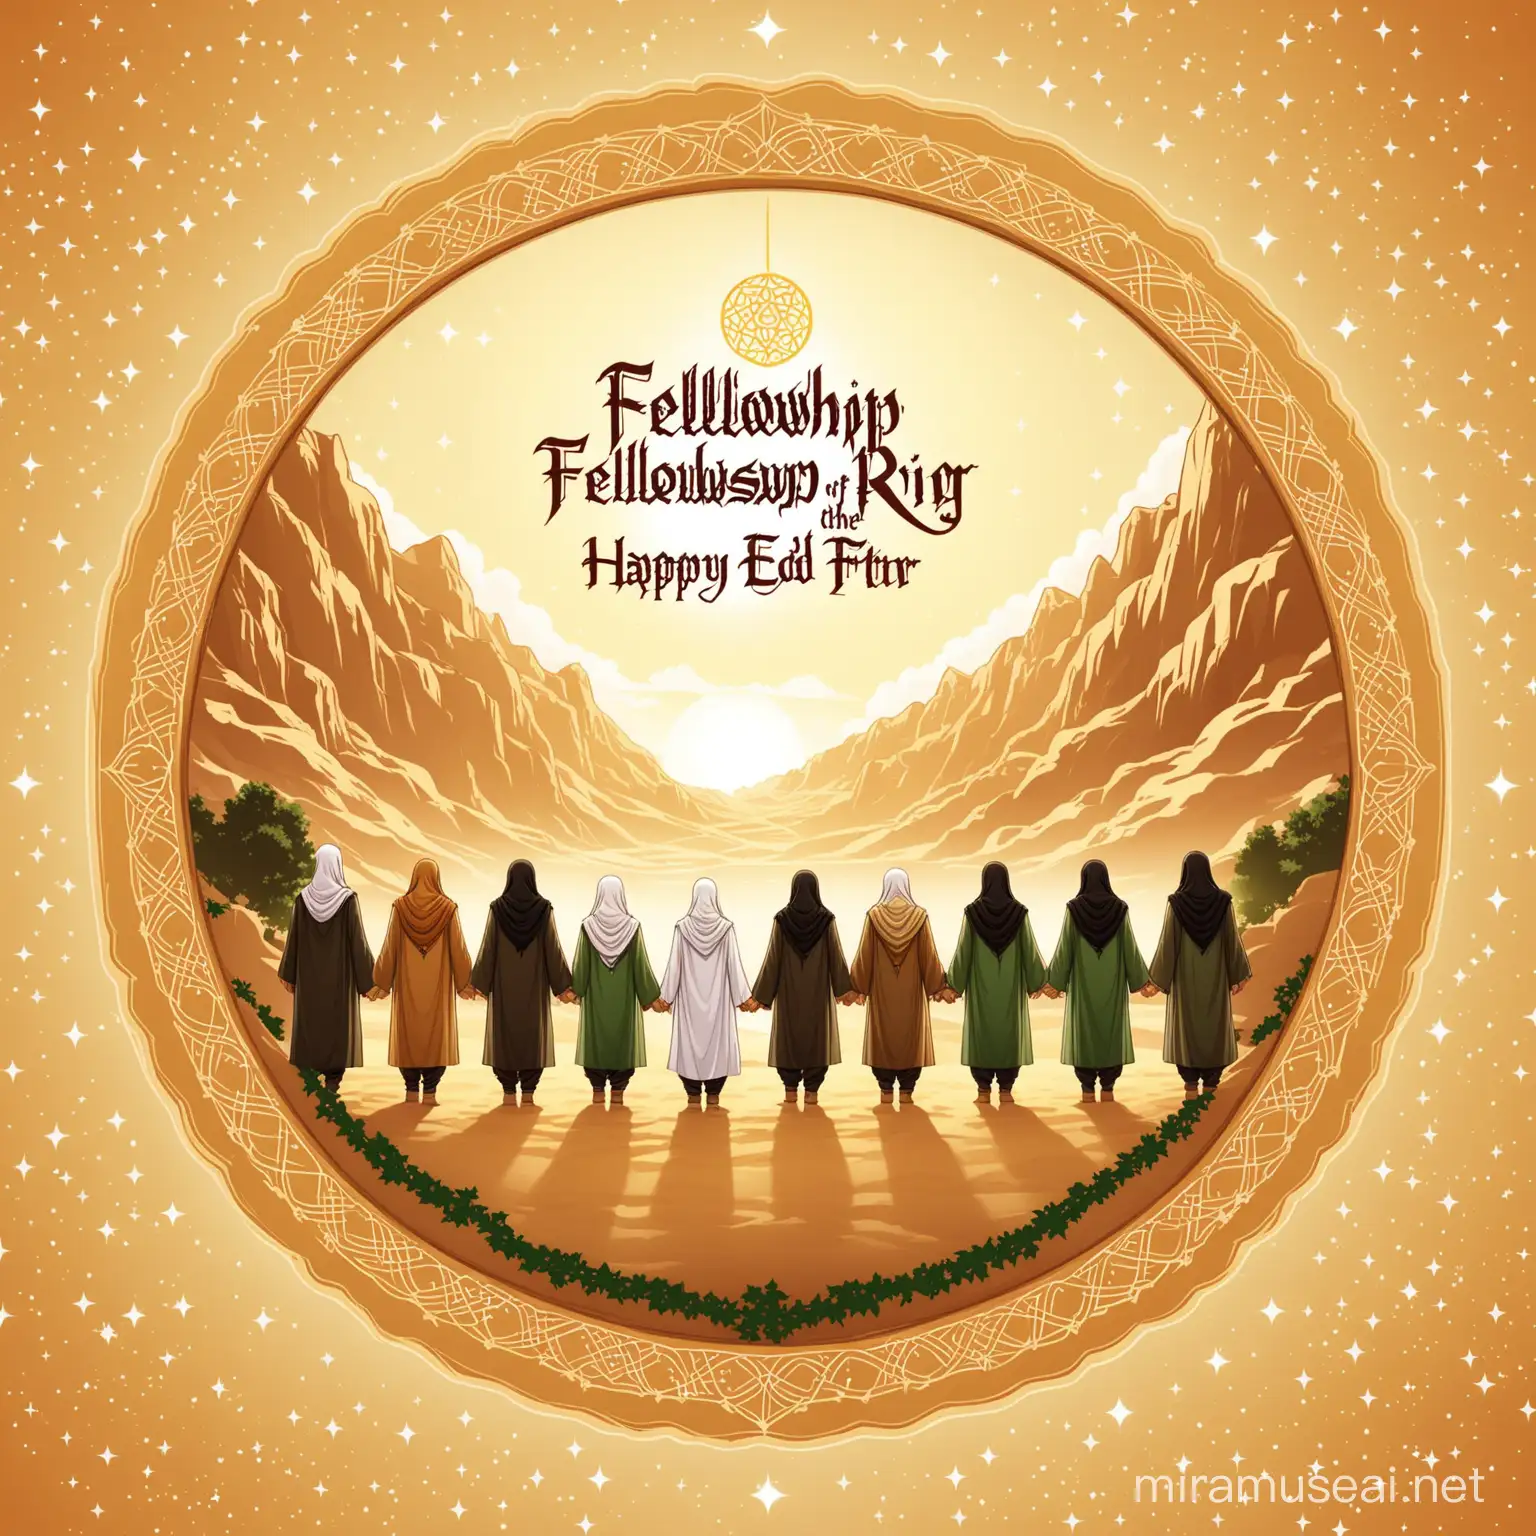 fellowship of the ring happy eid fitr